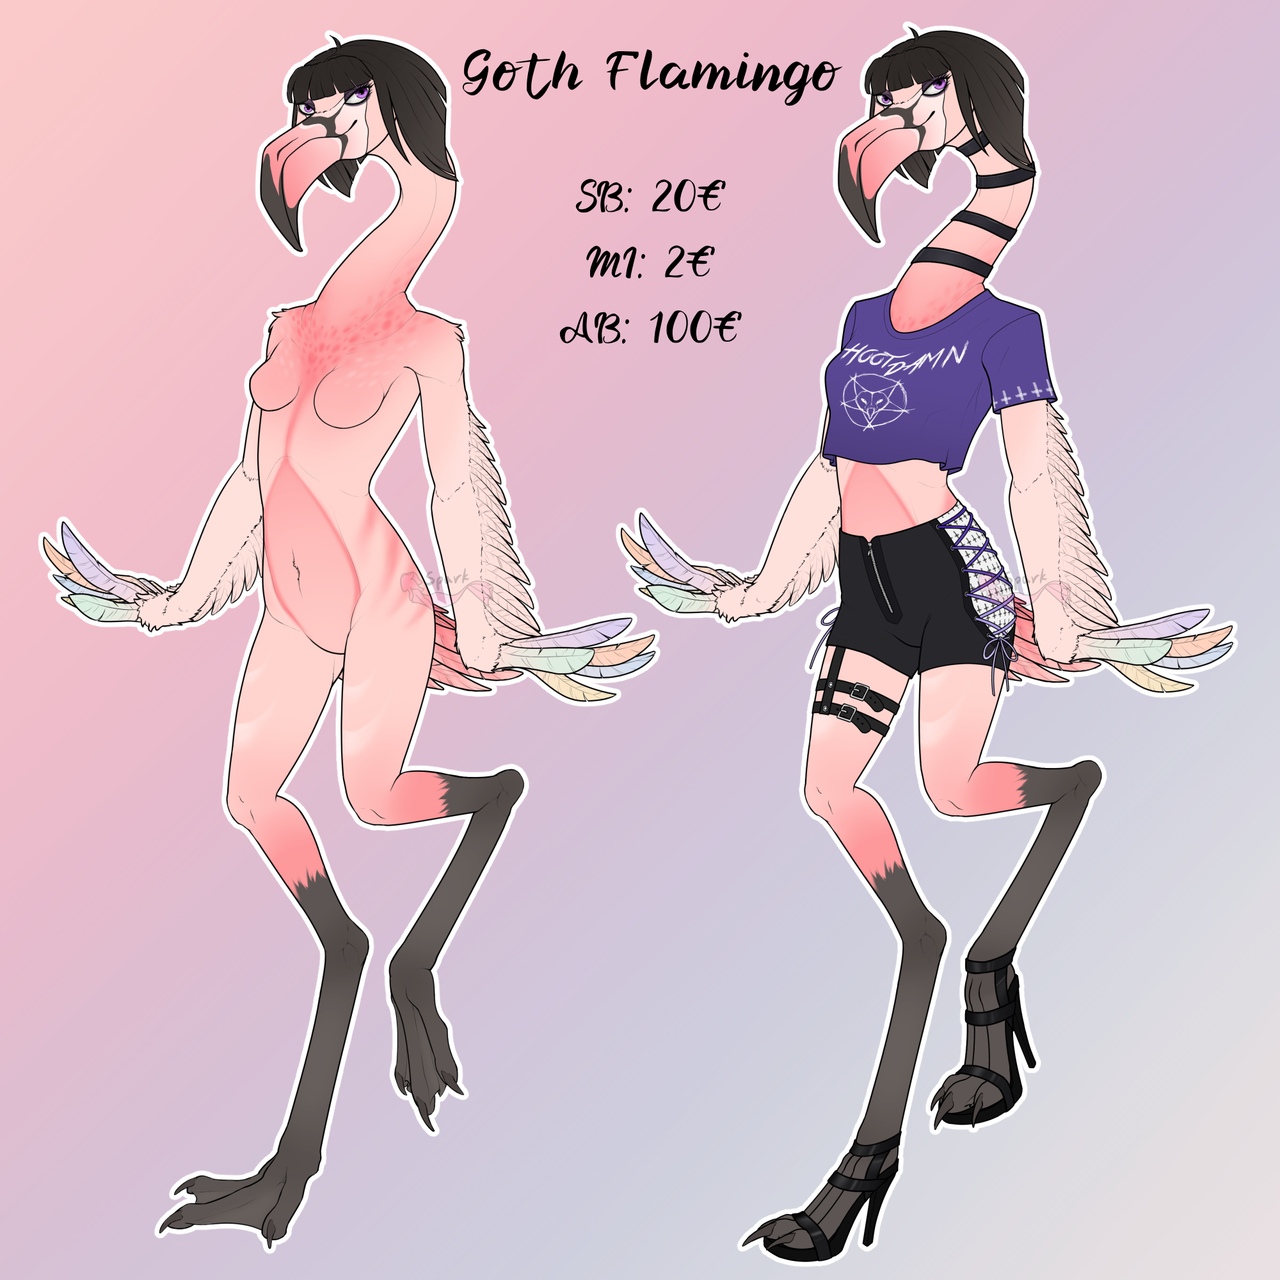 Goth Flamingo [SOLD]